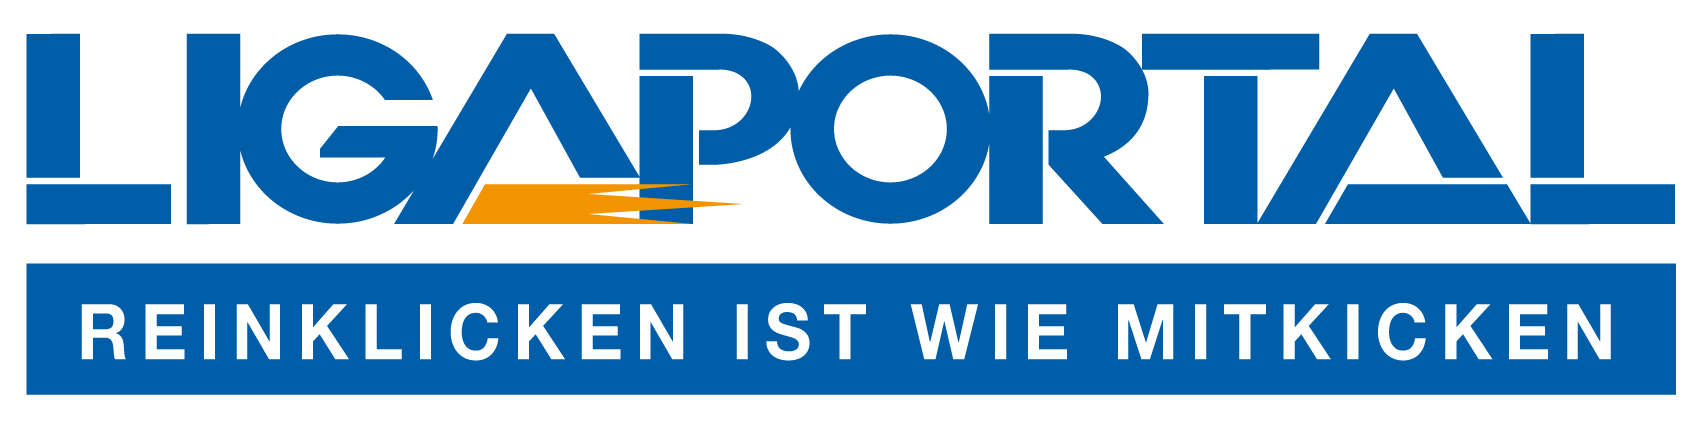 ligaportal-logotype